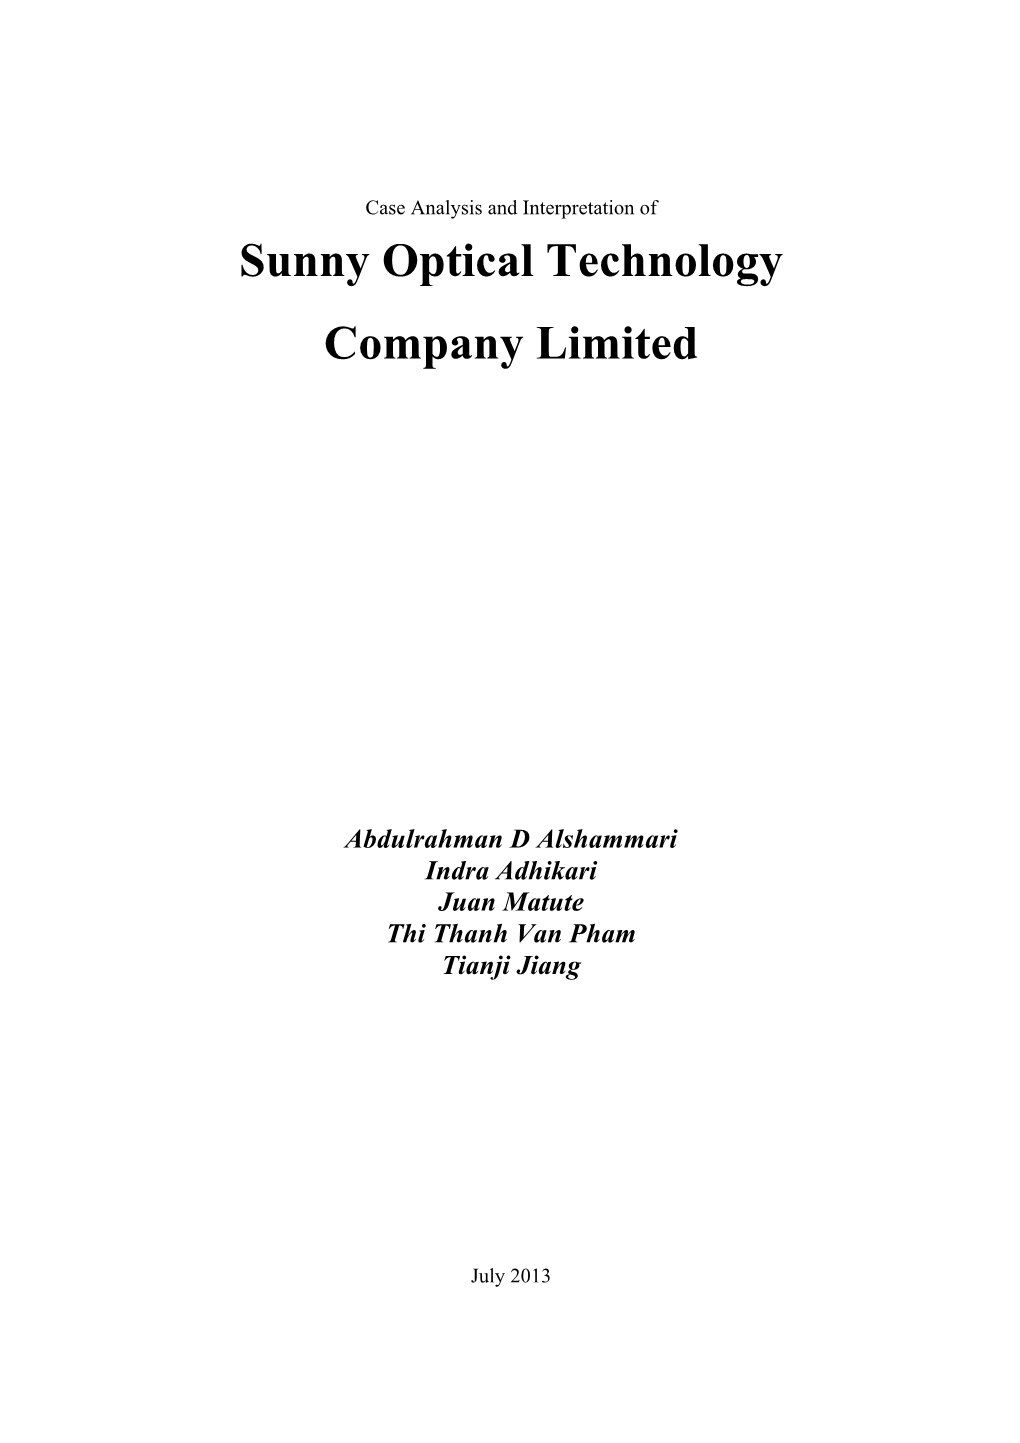 Sunny Optical Technology Company Limited